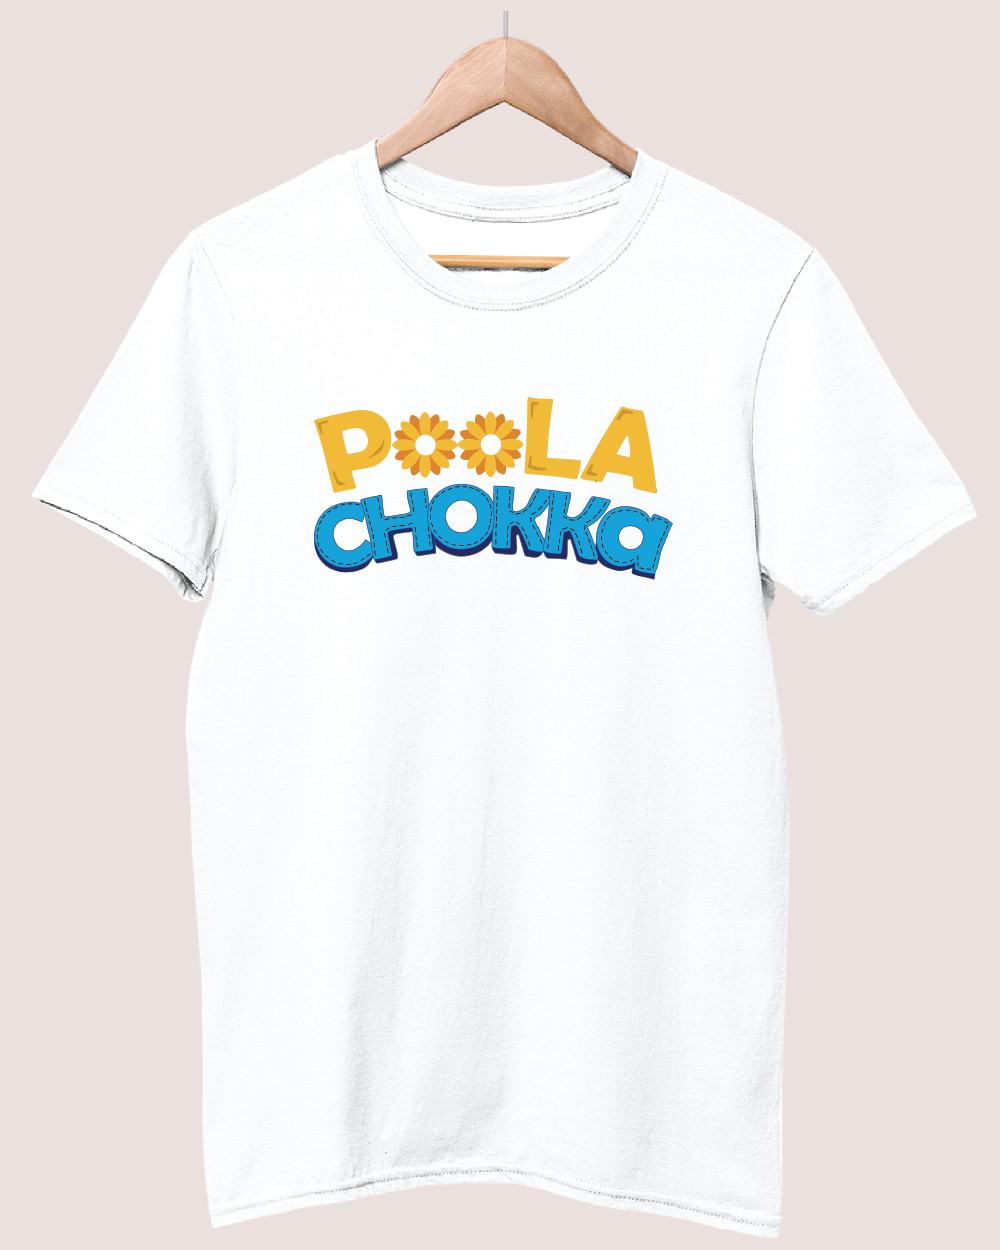 Poola chokka T-shirt